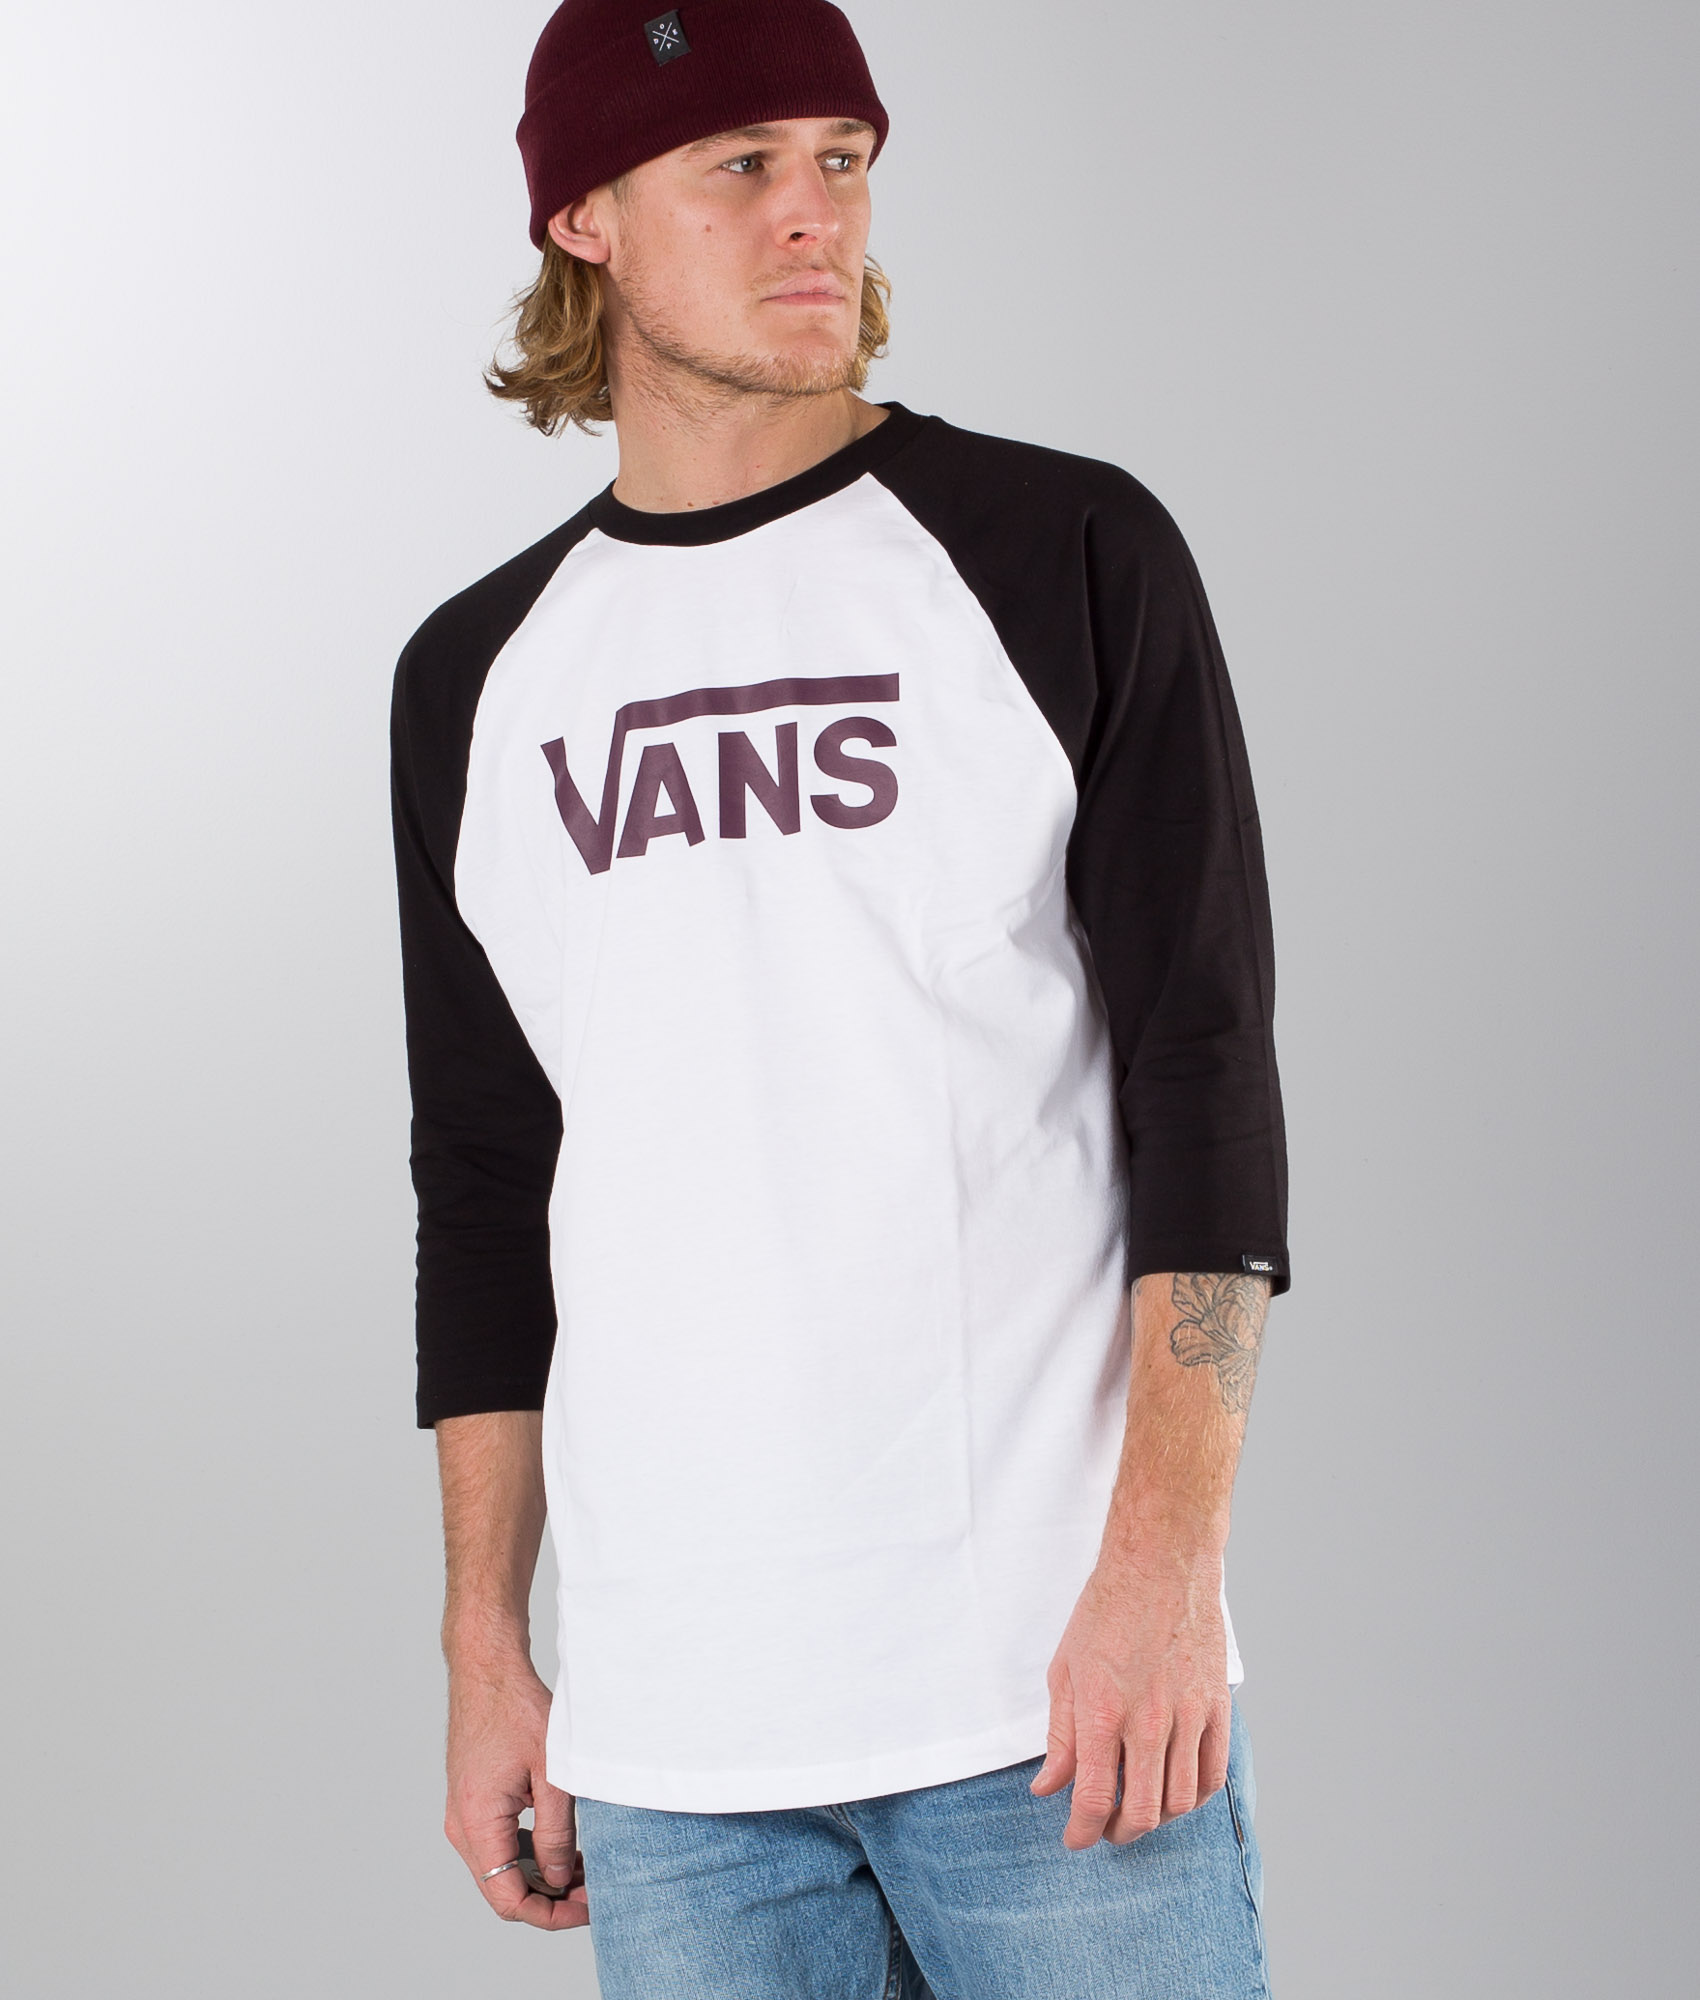 Vans Classic Raglan T-shirt White-Black 